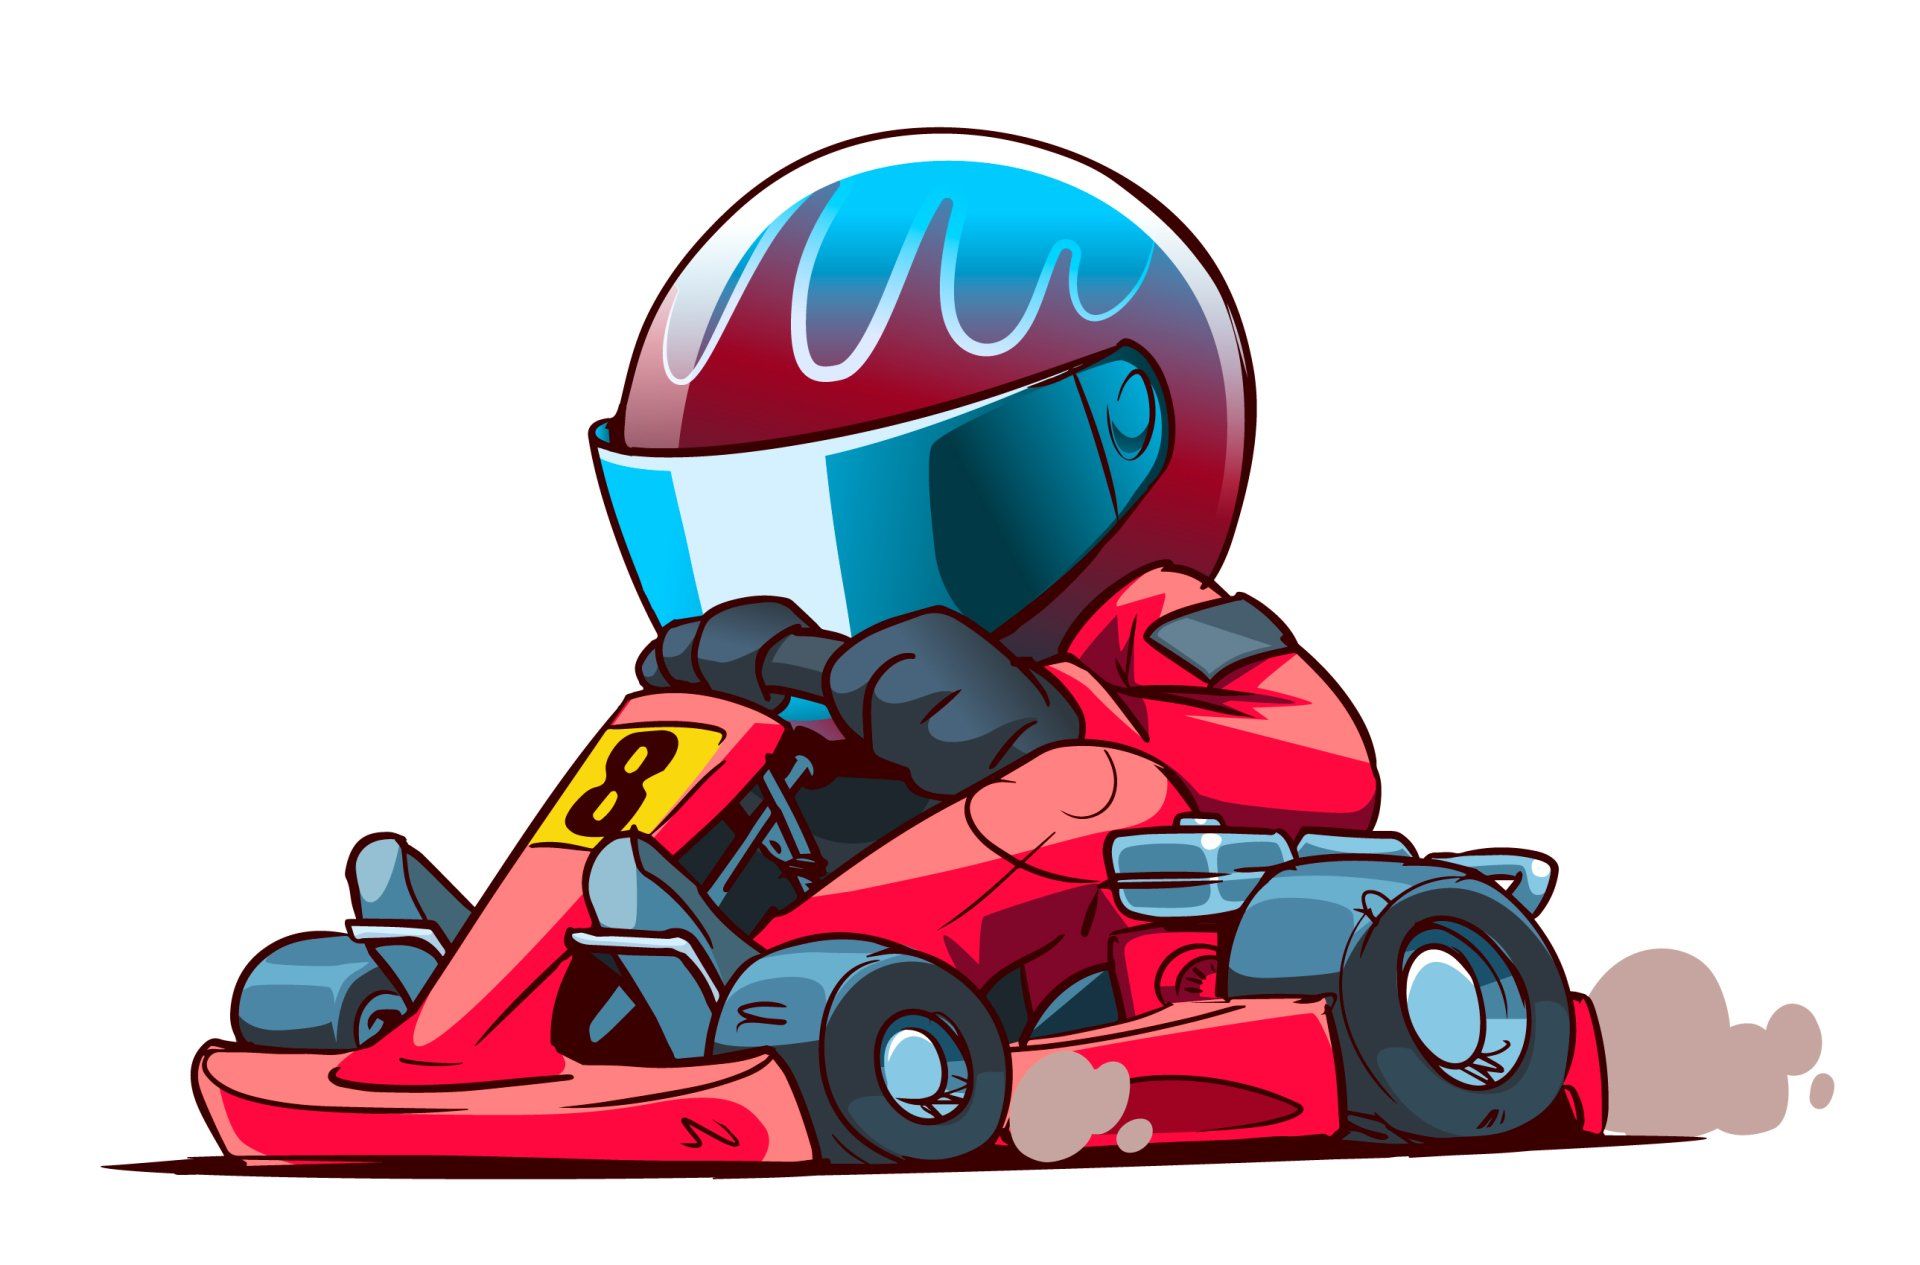 A cartoon illustration of a person riding a go kart.